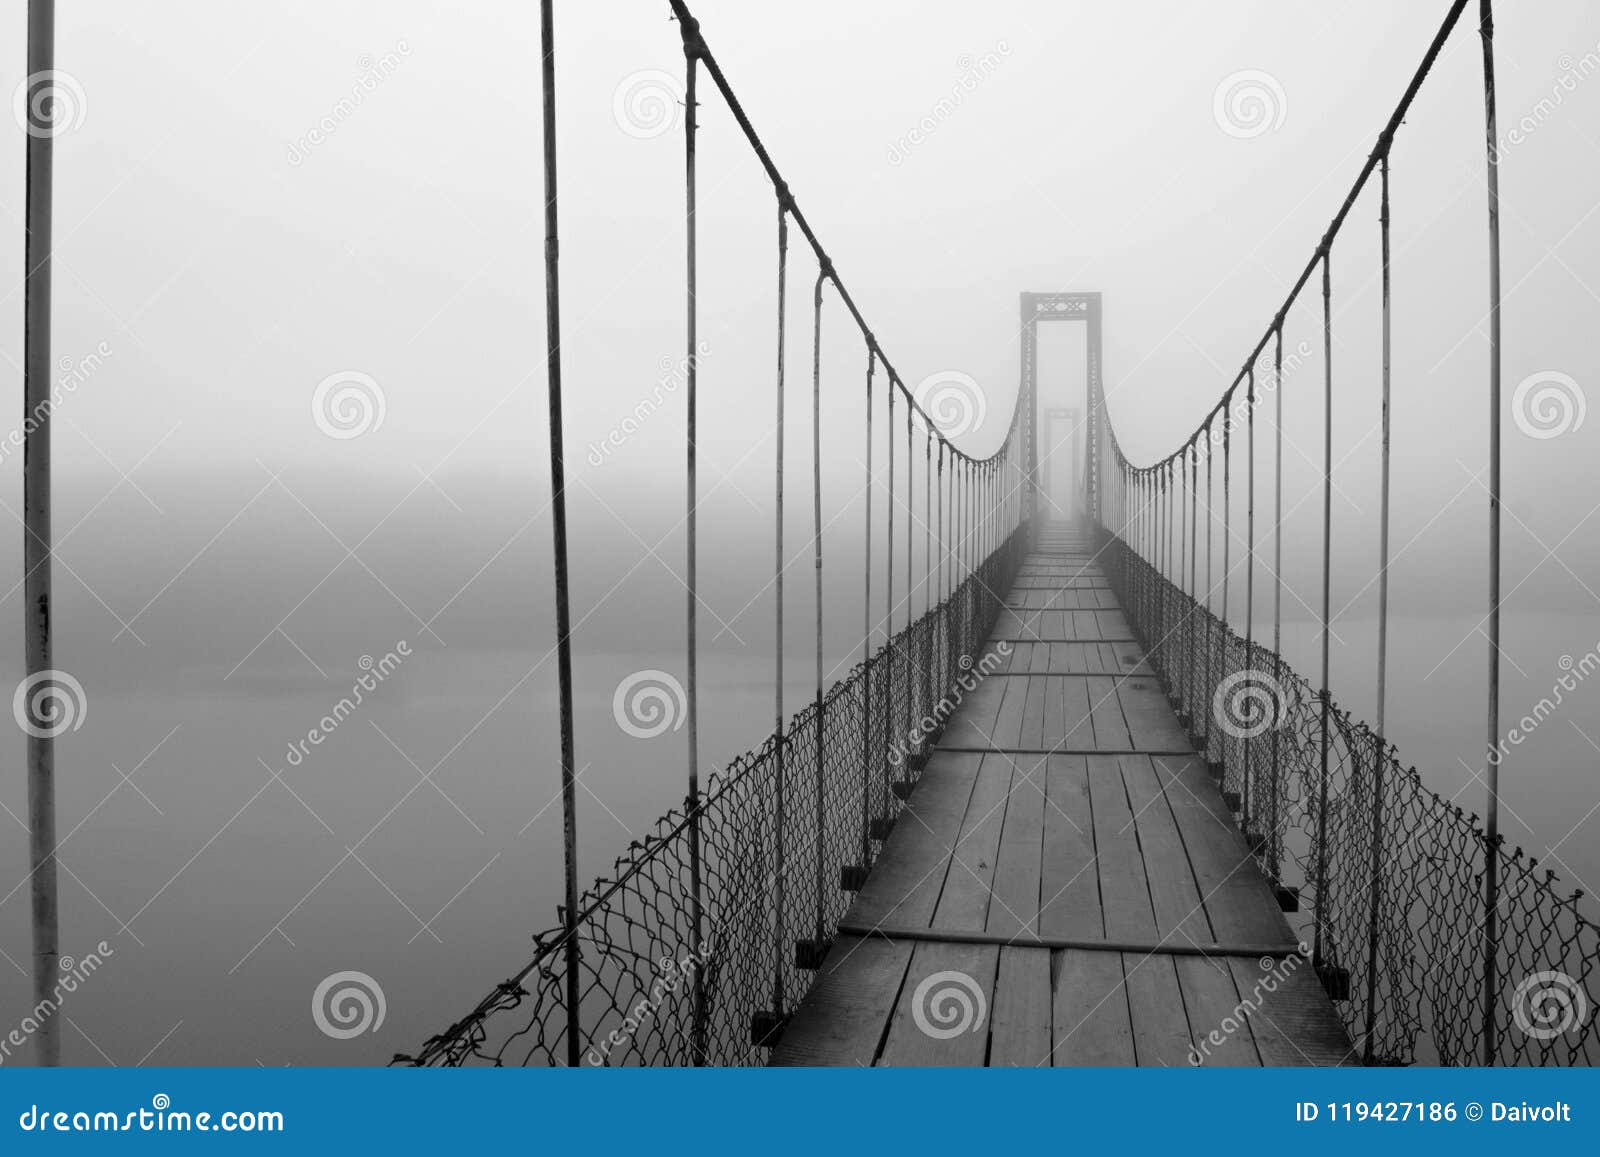 fog created on a bridge